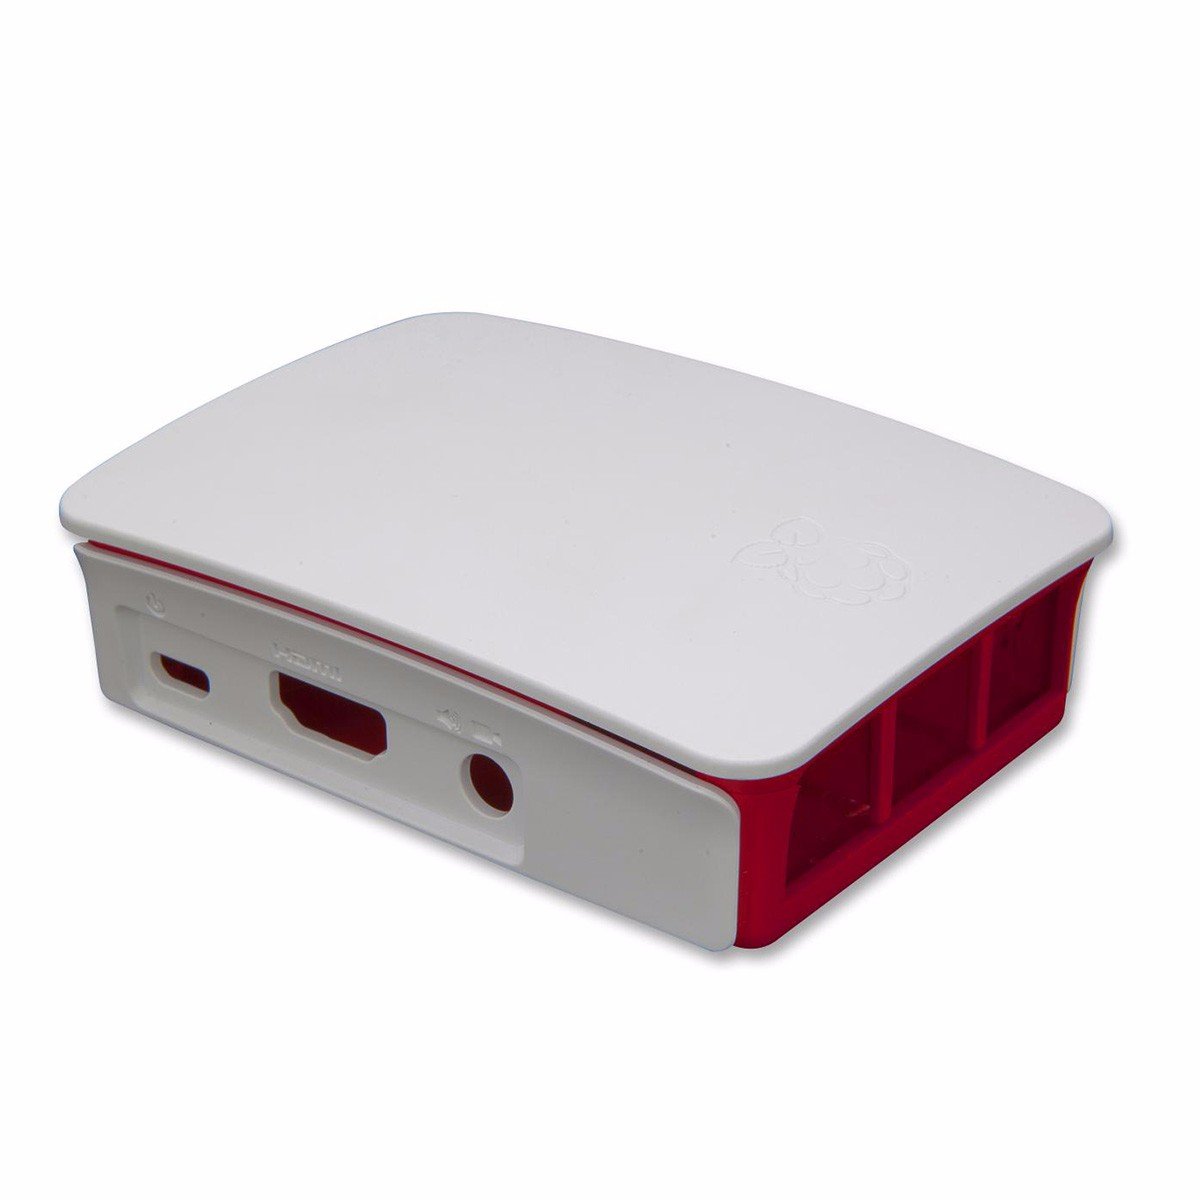 White Enclosure Protective Case For Raspberry Pi 3 Model B 1